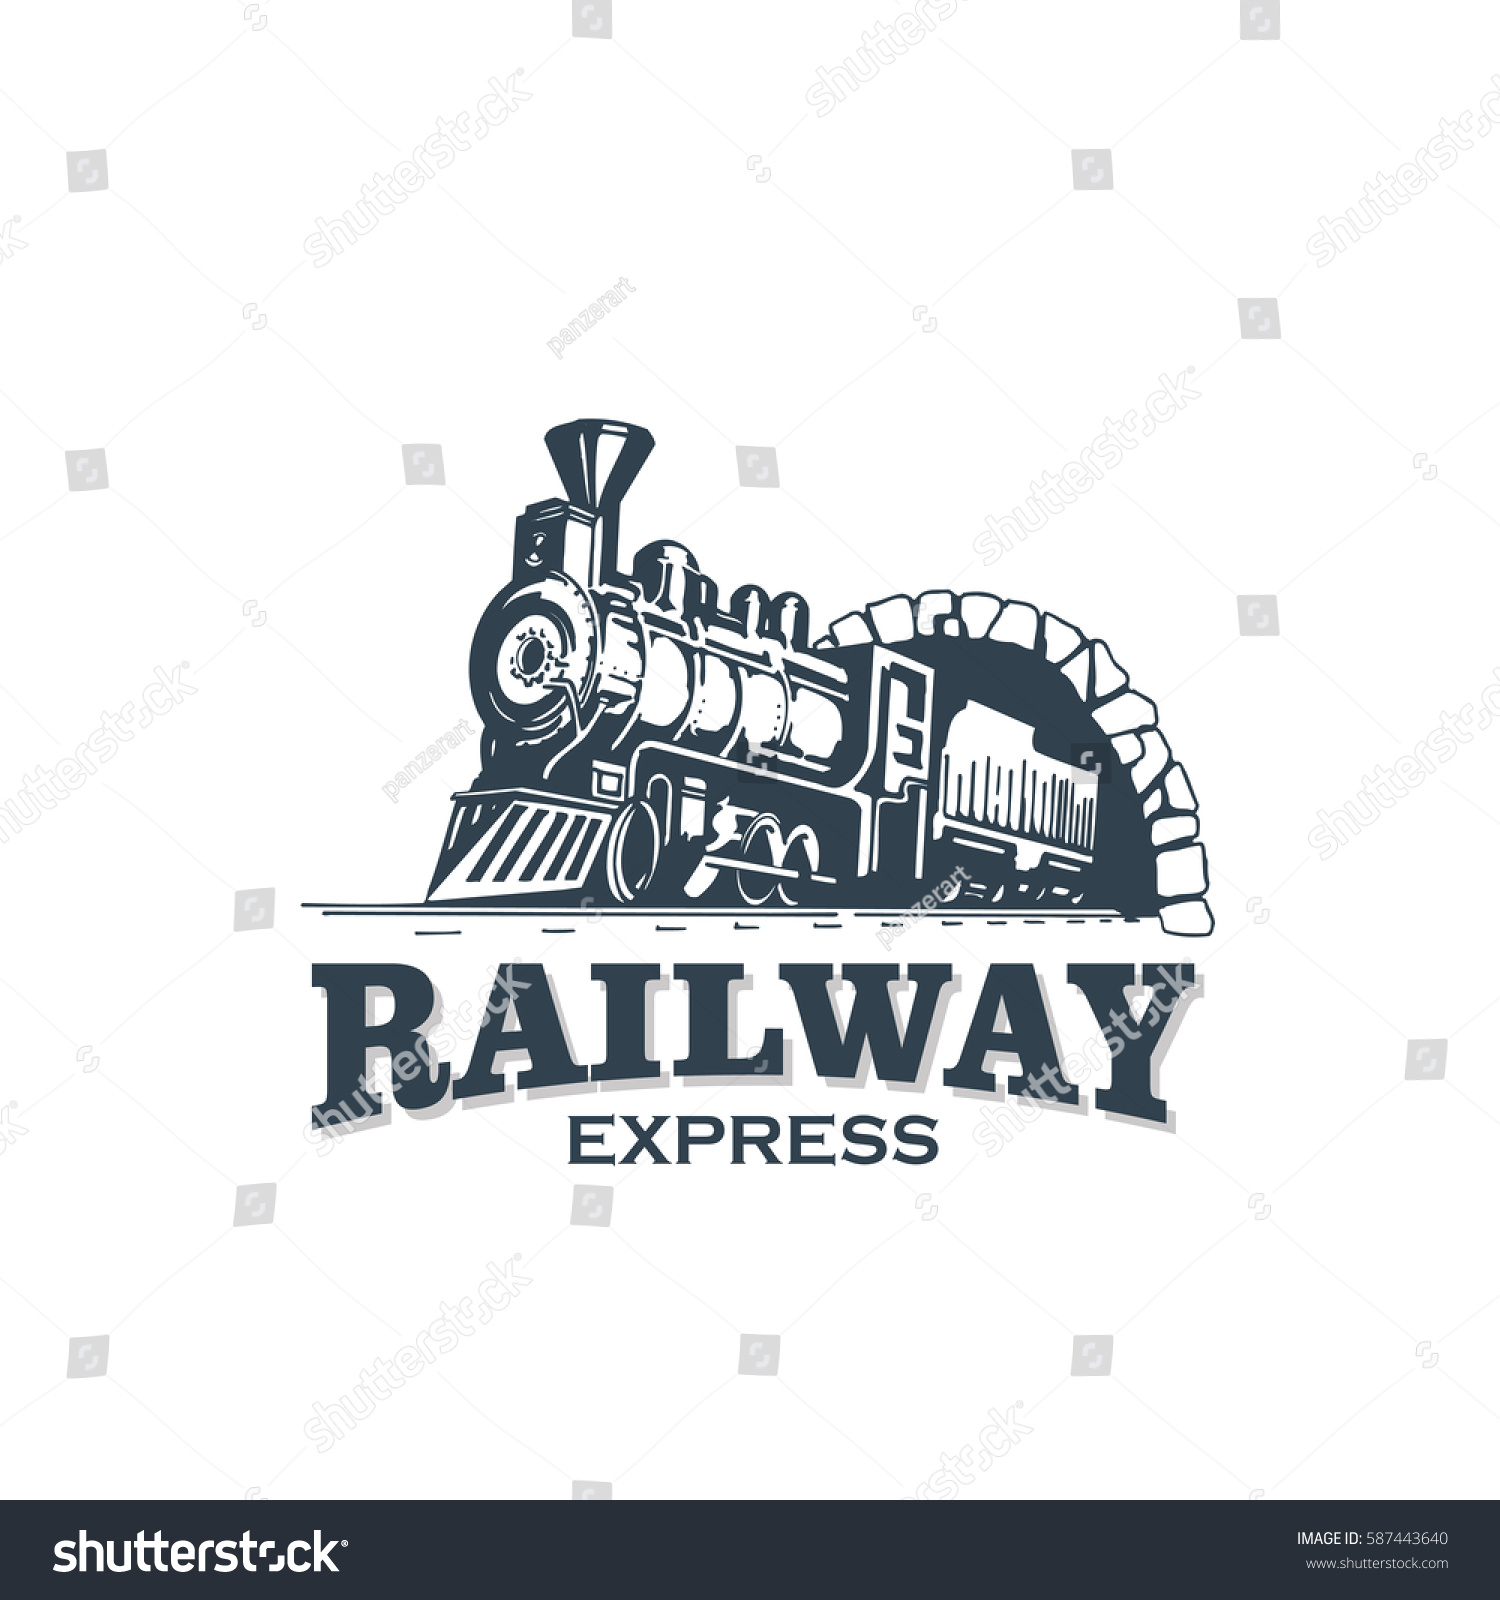 Railway Express Train Vintage Logo Stock Vector 587443640 - Shutterstock